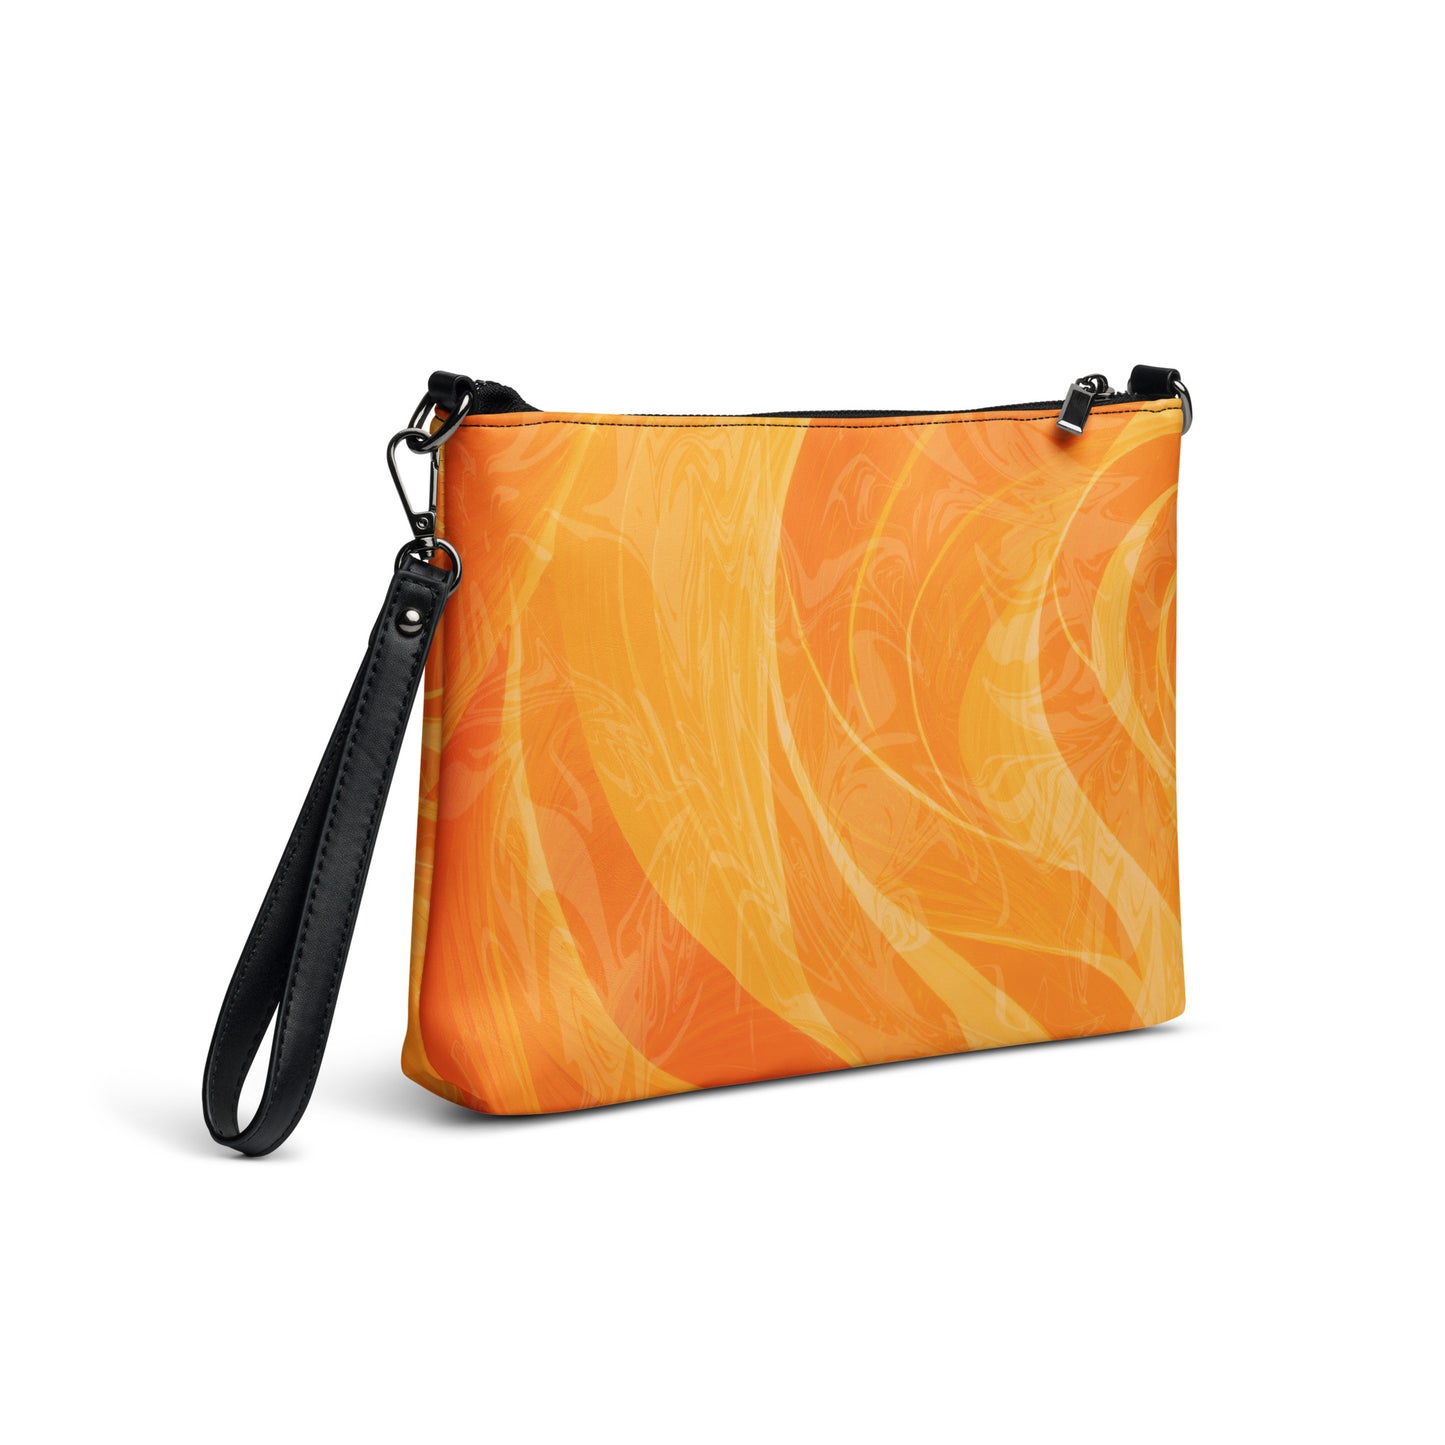 Orange Swirl Crossbody bag by Emmy Spoon